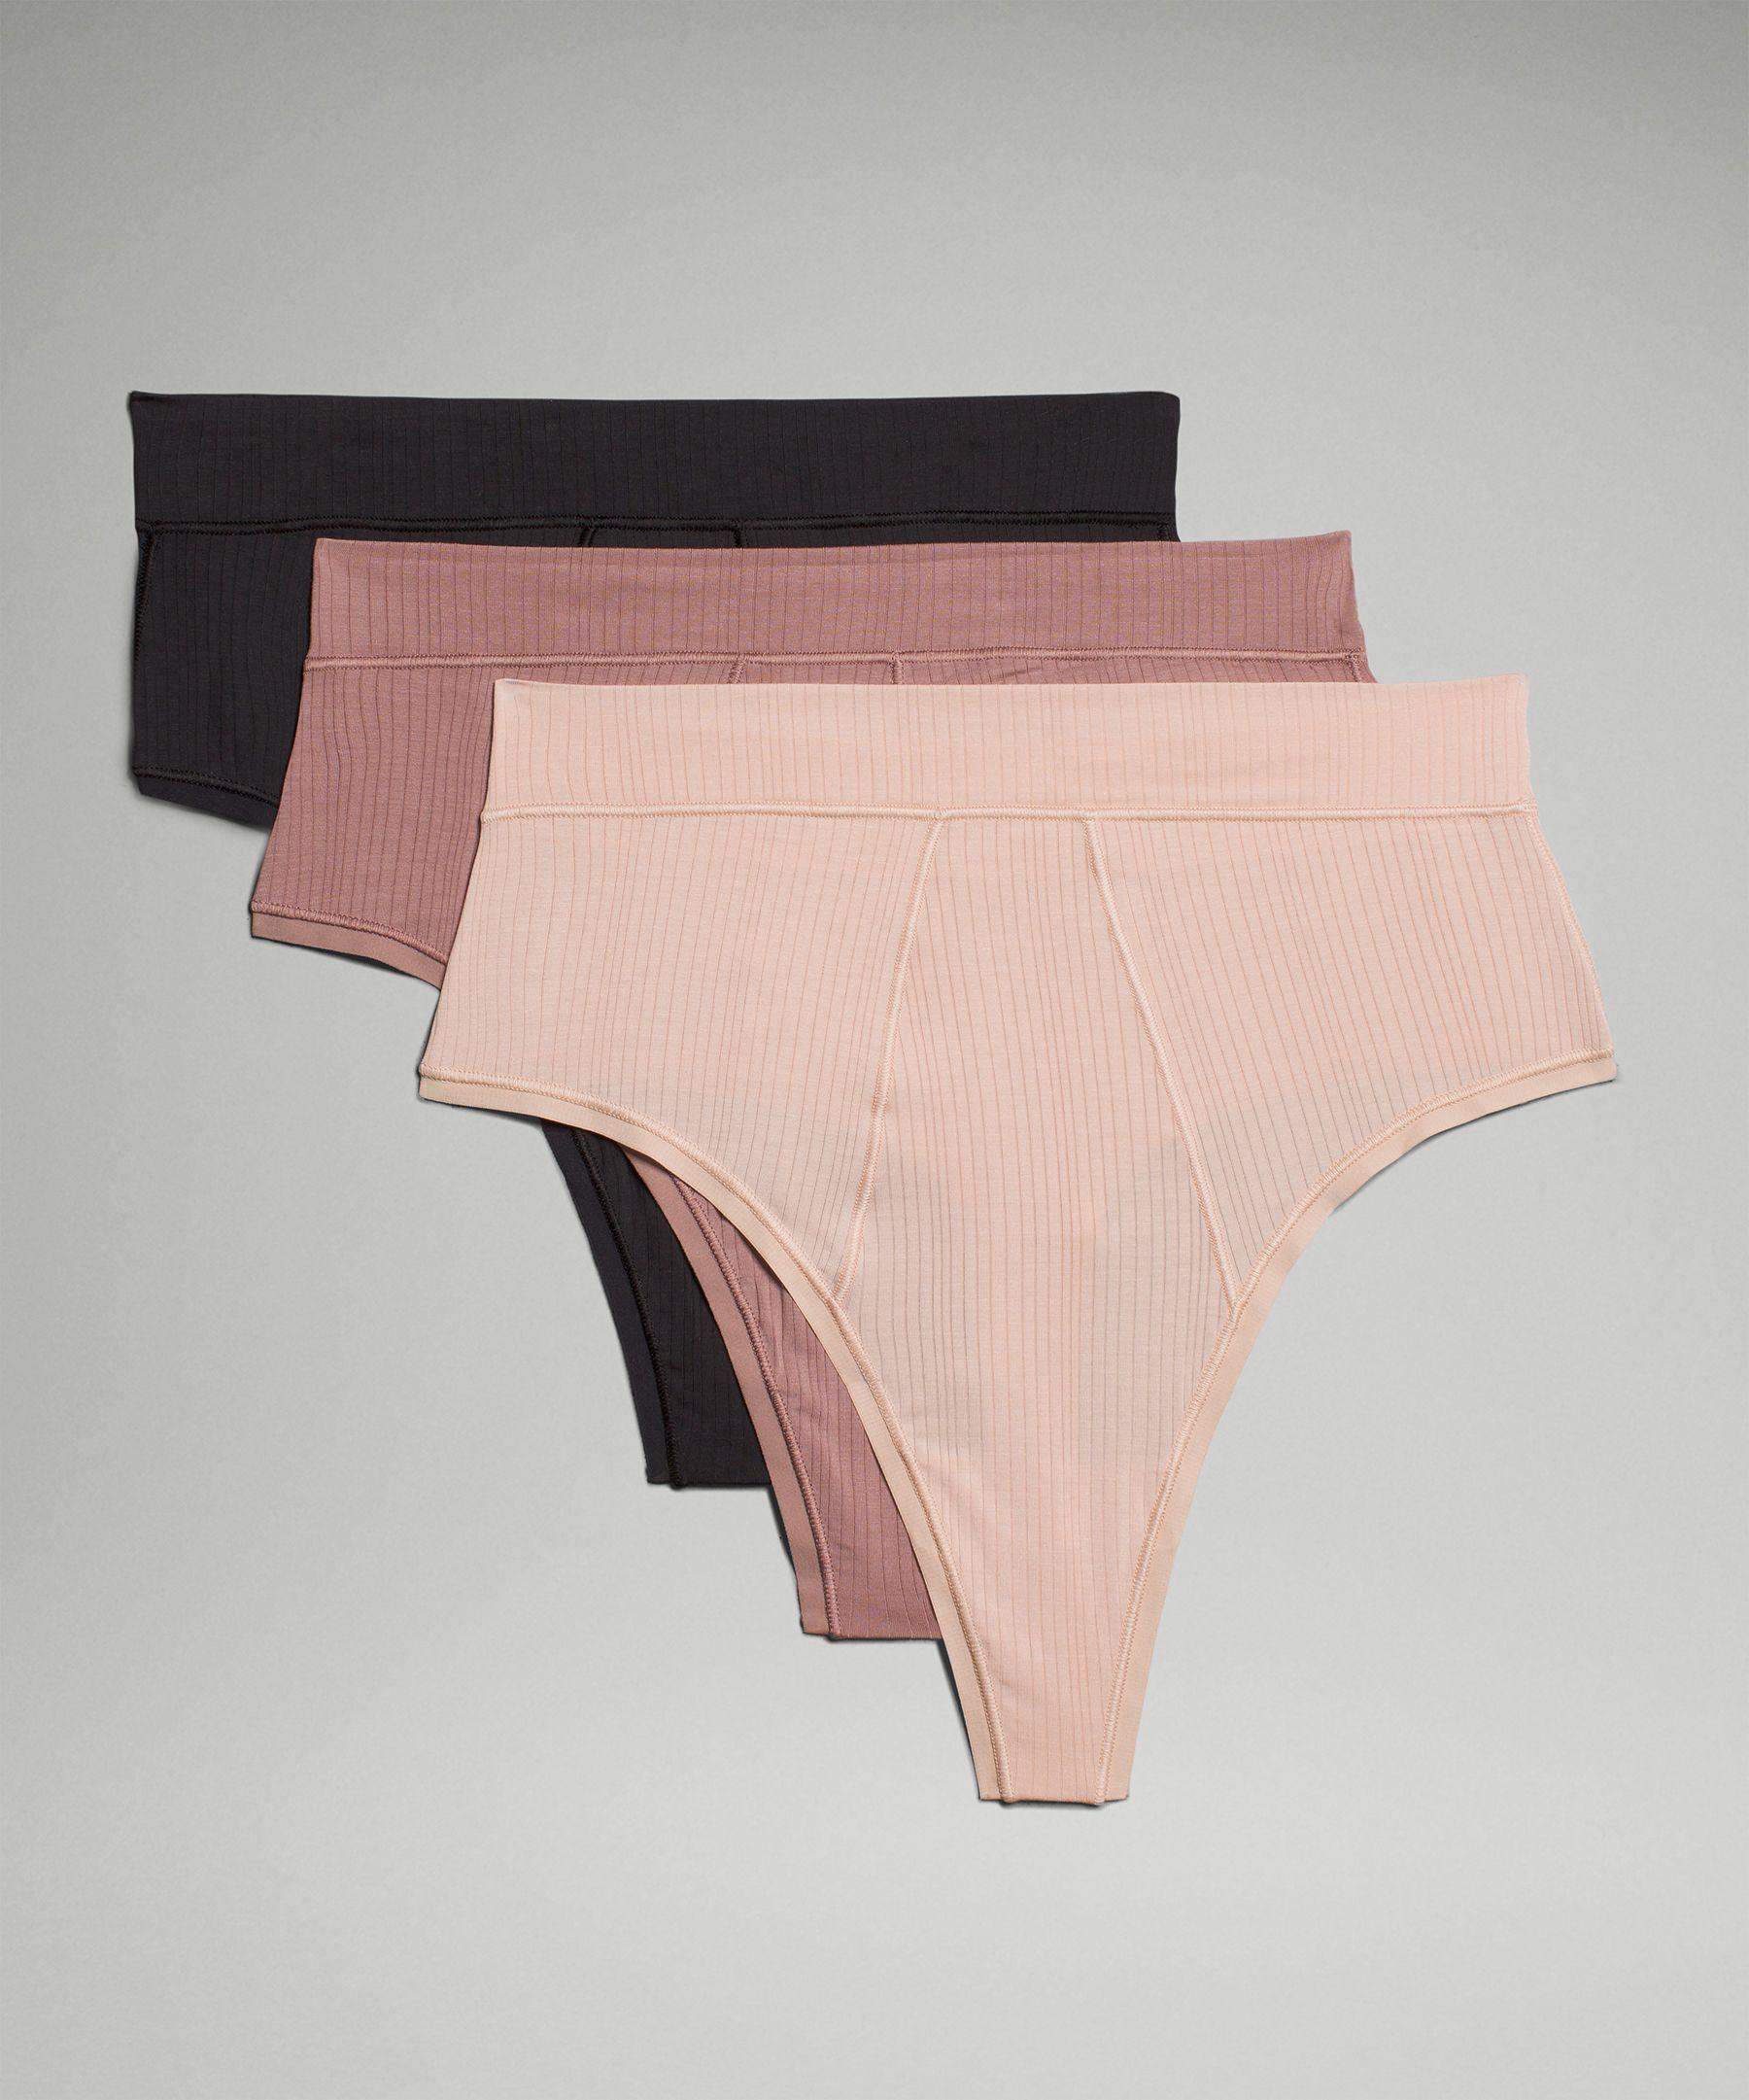 https://cdna.lystit.com/photos/lululemon/15c2a0c3/lululemon-athletica-designer-BlackRIBTwilight-RoseRIBMist-Underease-Ribbed-High-waist-Thong-Underwear-3-Pack.jpeg